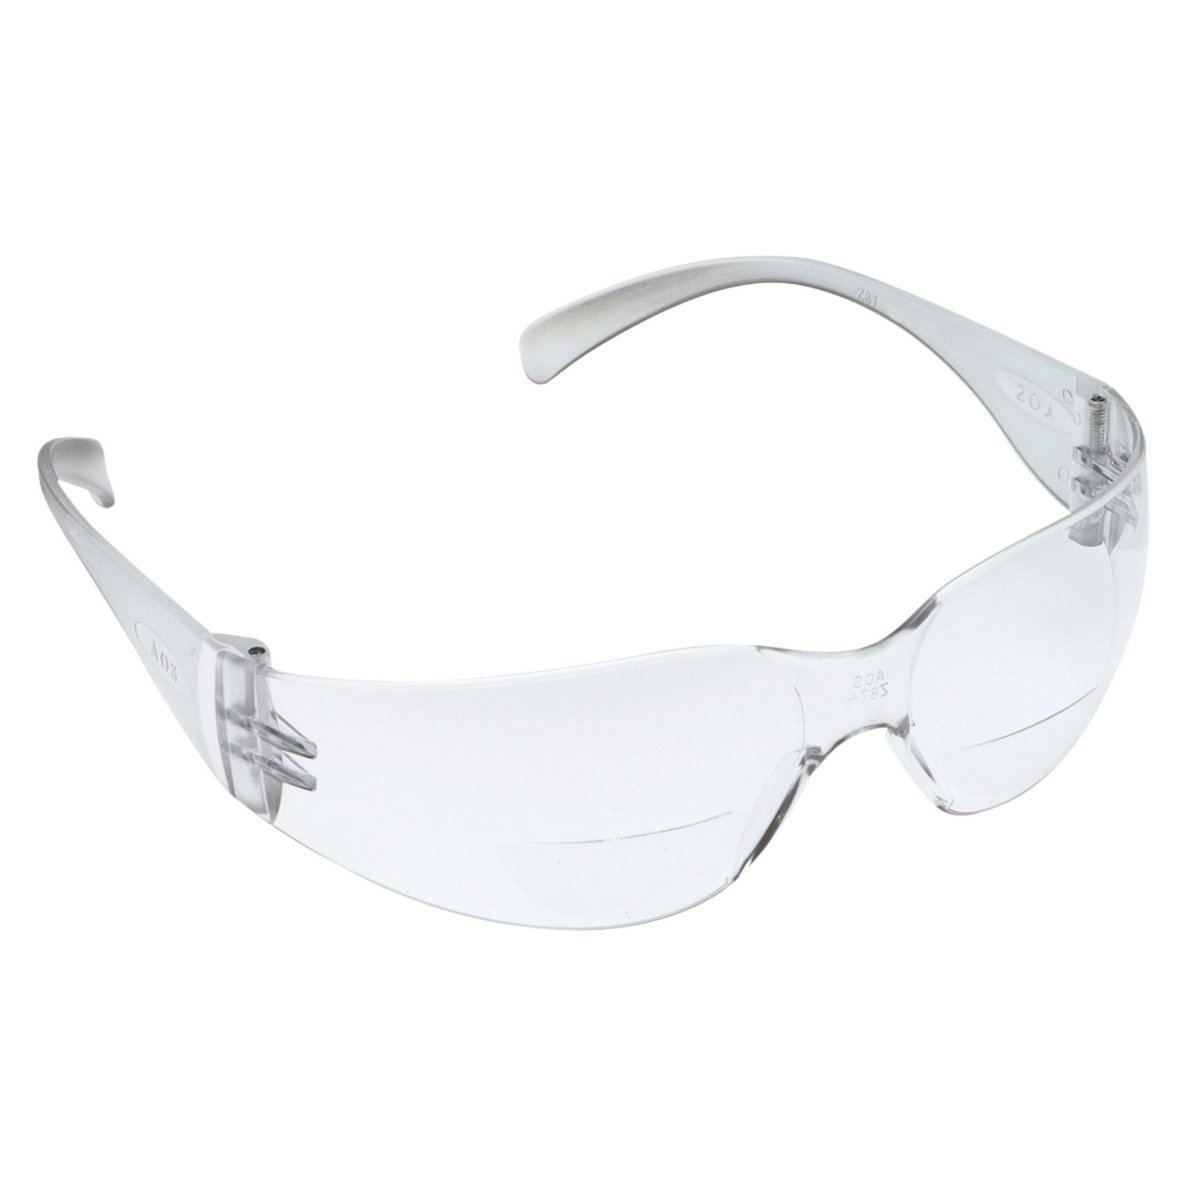 BX Safety Eyewear Silver/Black Frame +2.0 Diopter Polycarbon Anti-Fog Lenses 